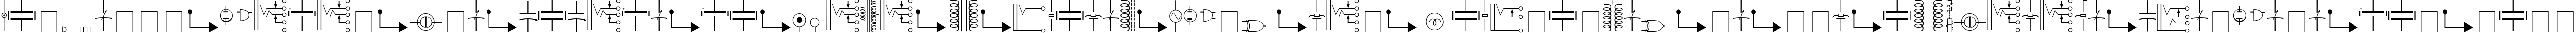 Пример написания шрифтом Carr Electronic Dingbats текста на испанском